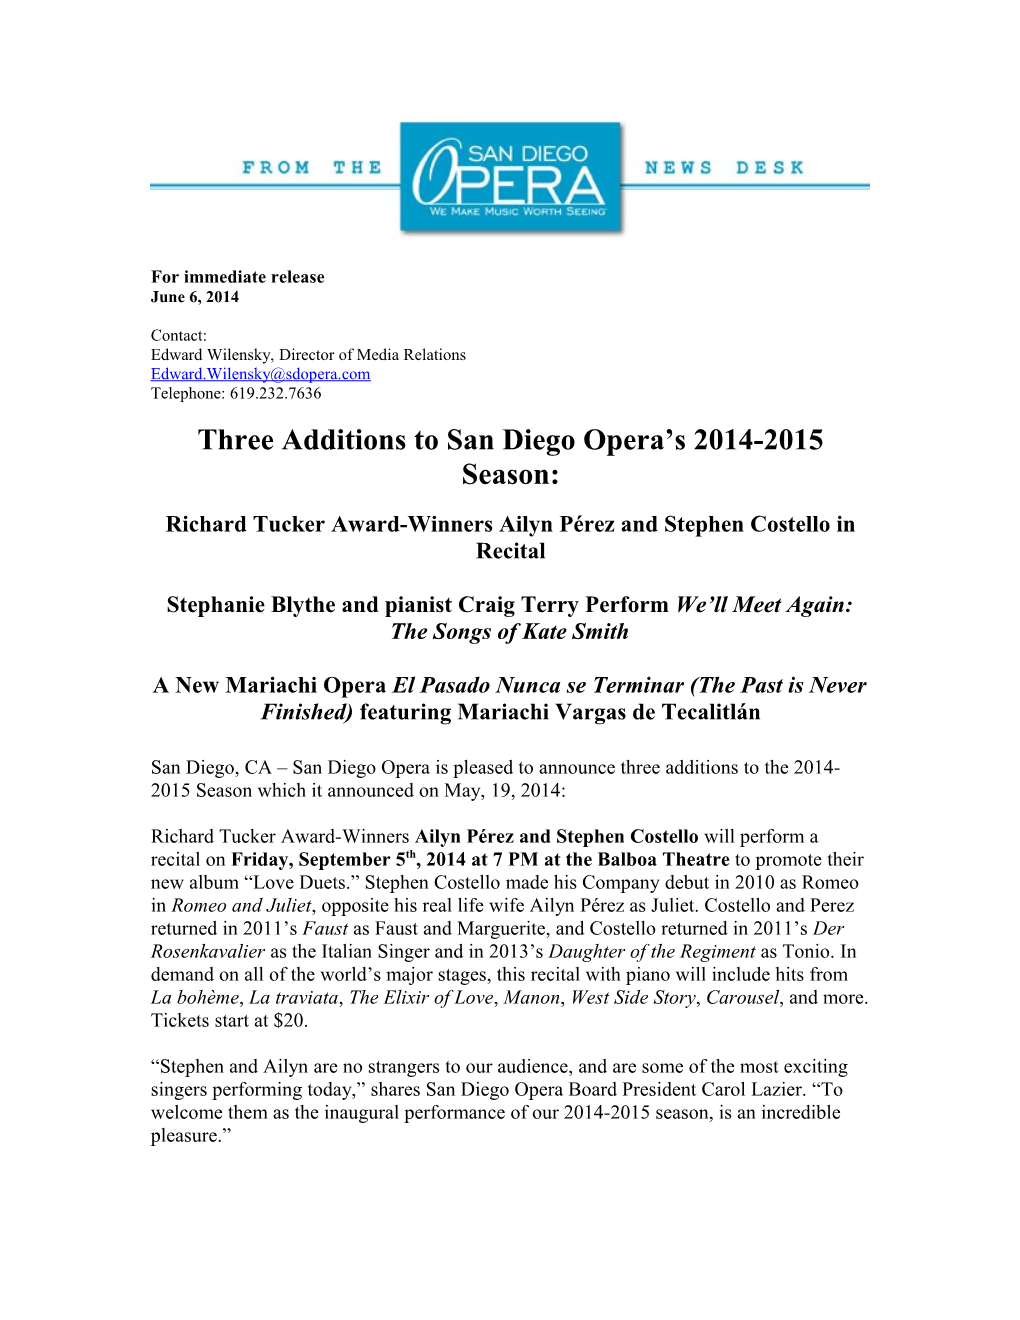 Three Additions to San Diego Opera S 2014-2015 Season